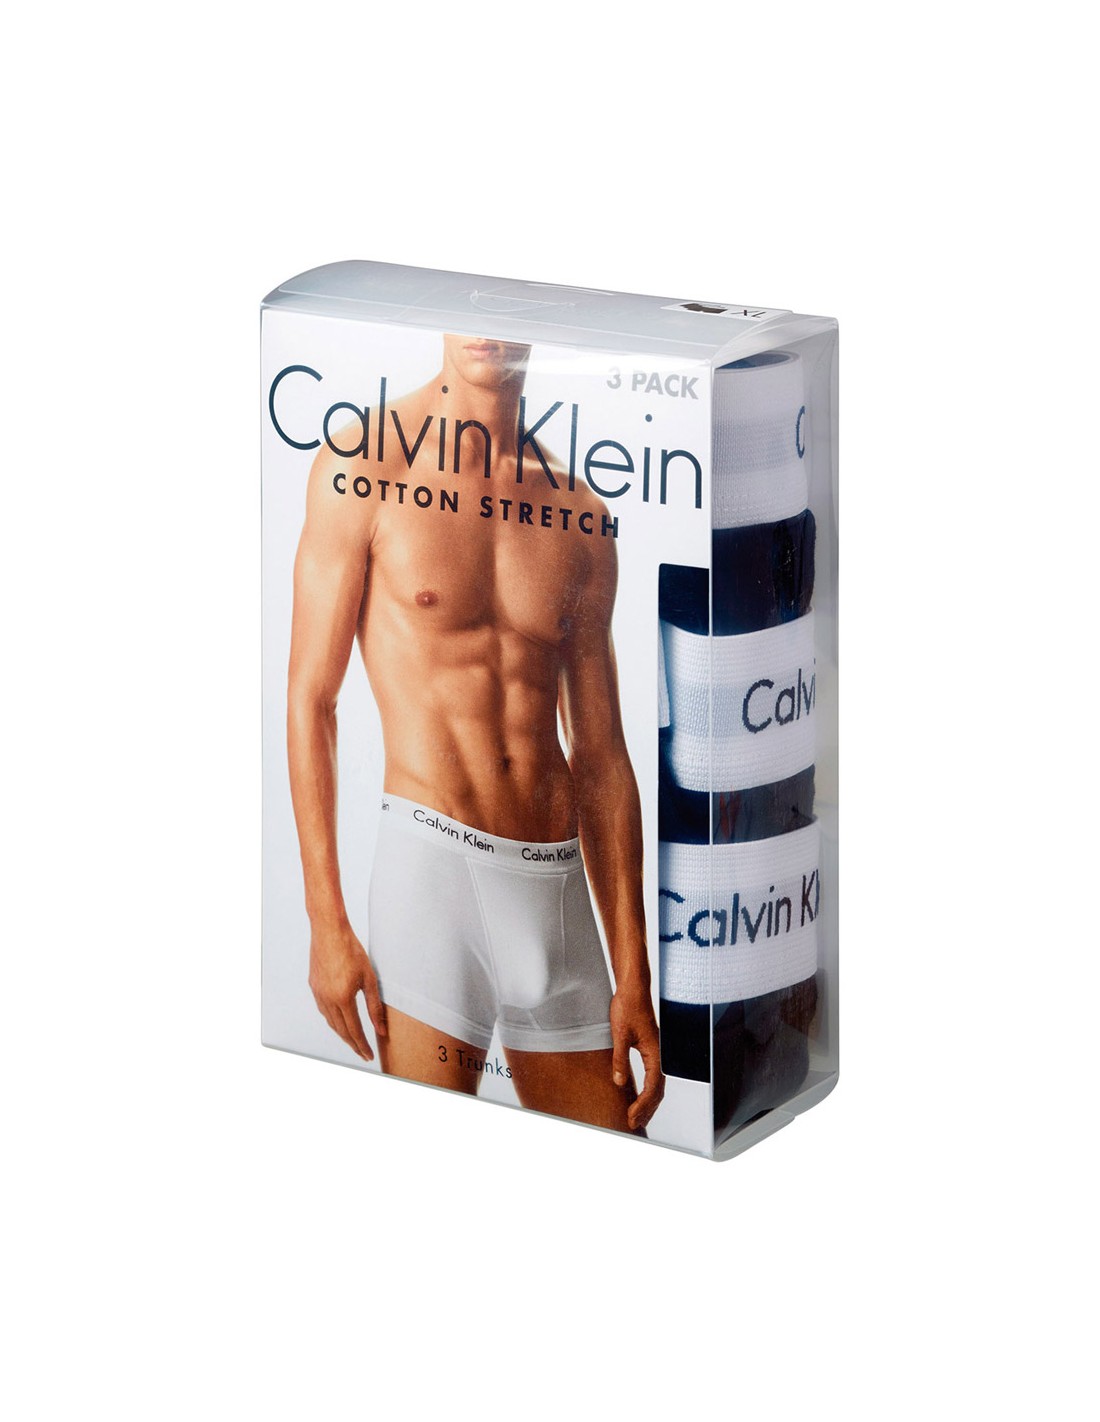 CALVIN KLEIN Cotton Stretch - Boxers 3 pack